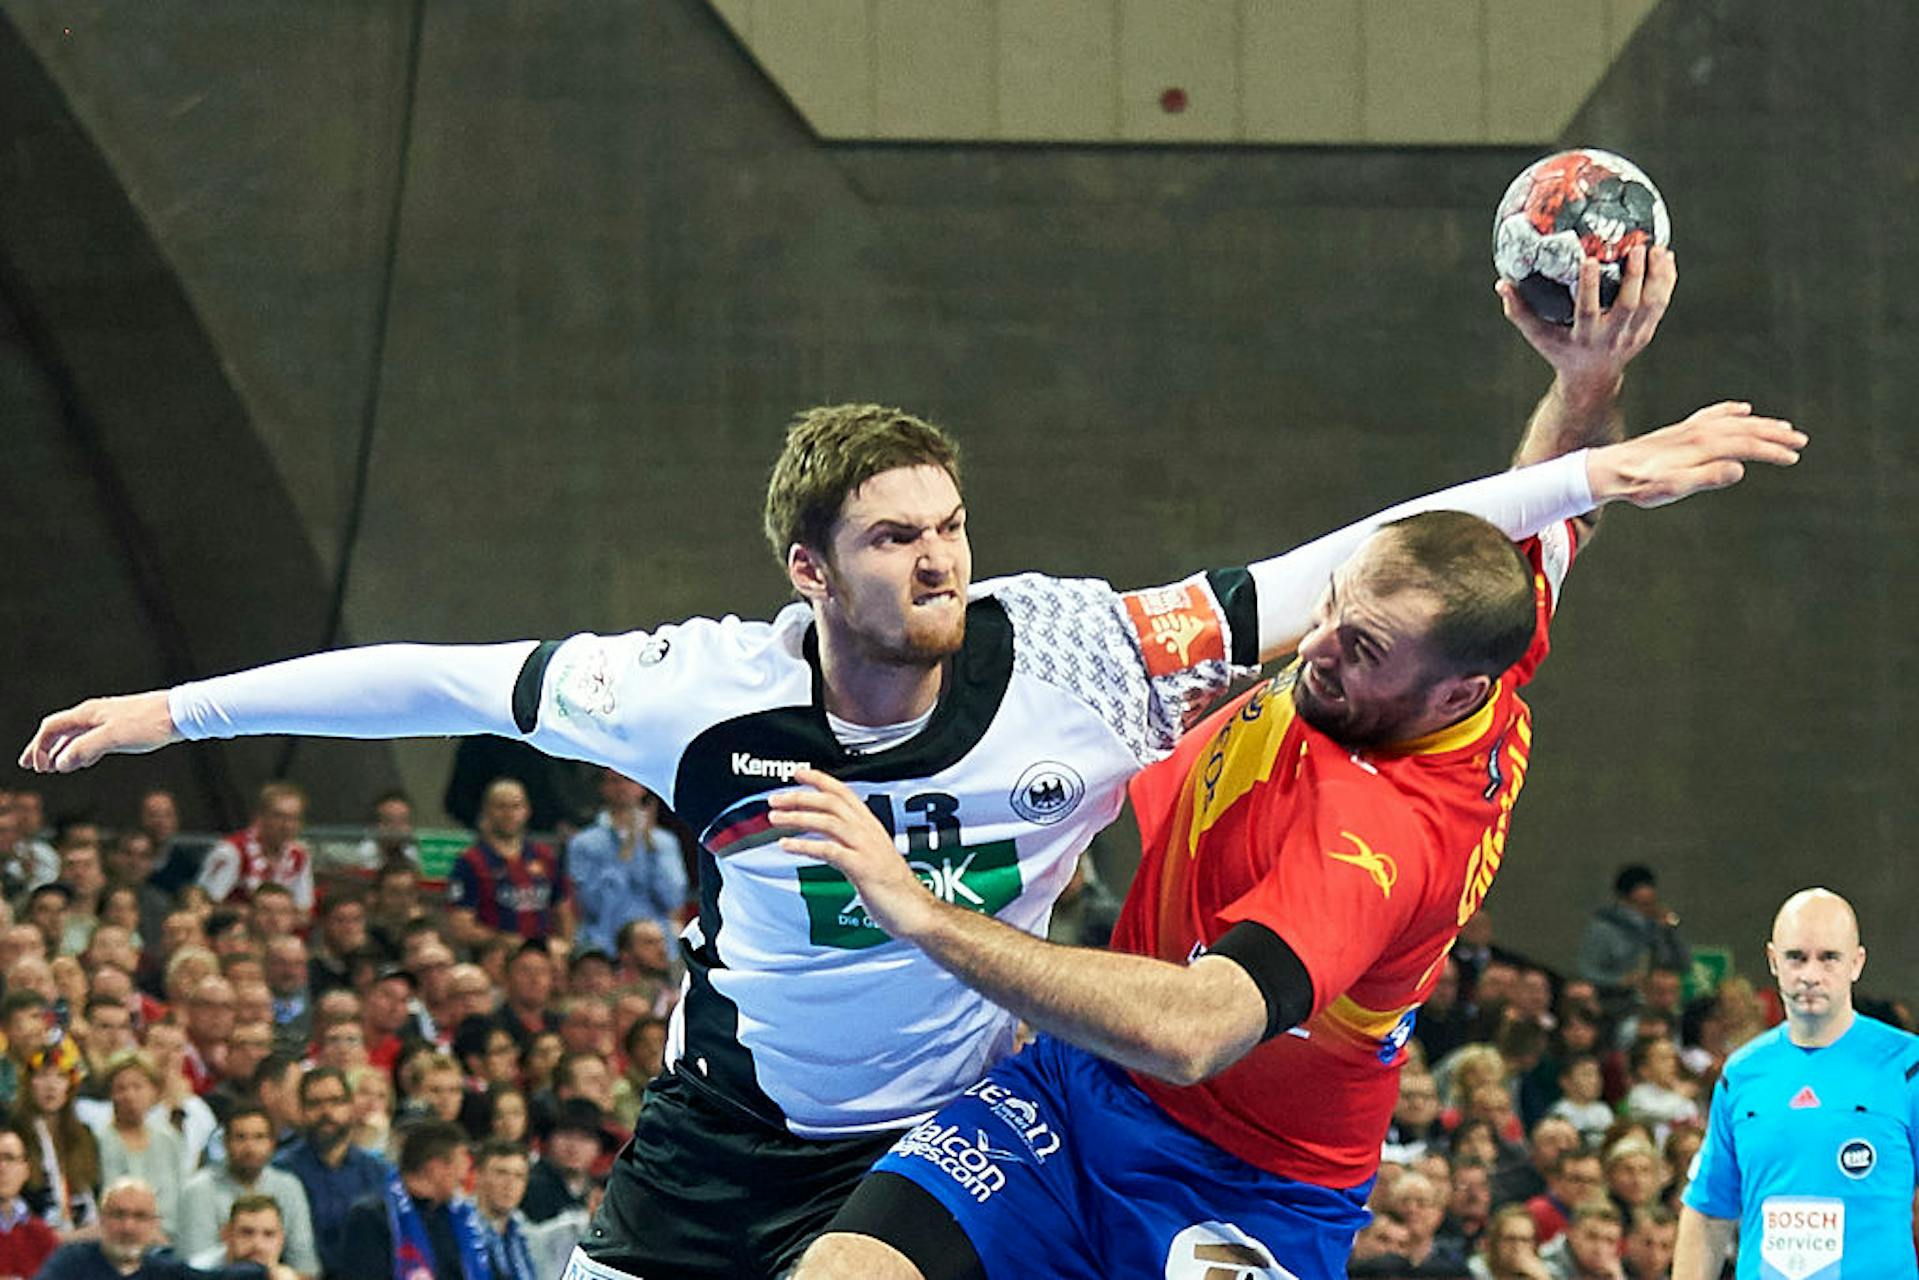 Trivago backs 2023 World Handball Championship